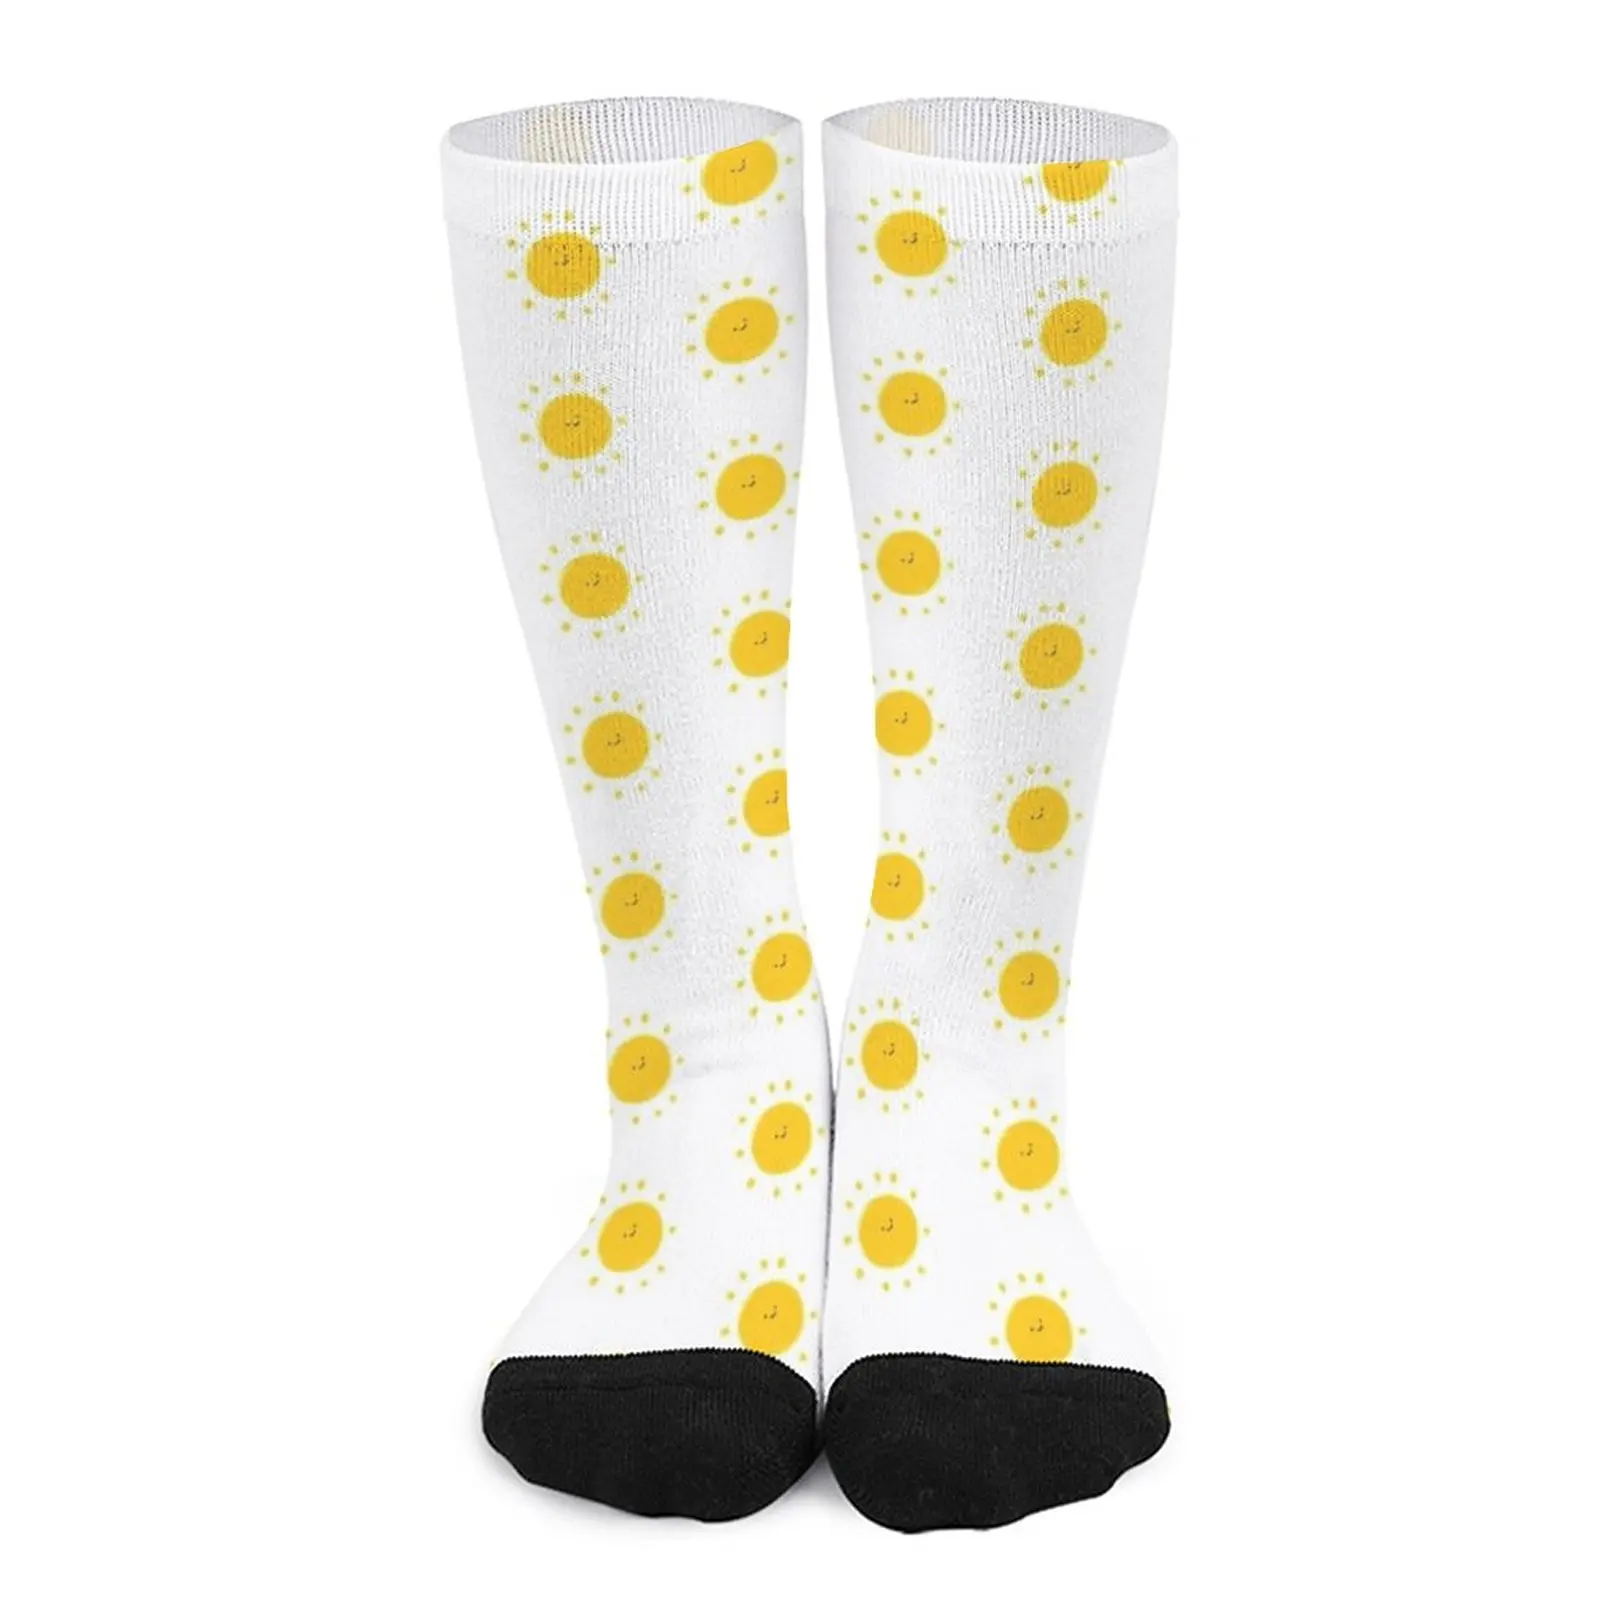 Mr. Sunshine Socks Woman socks socks aesthetic compression socks men thoko african sunshine lp